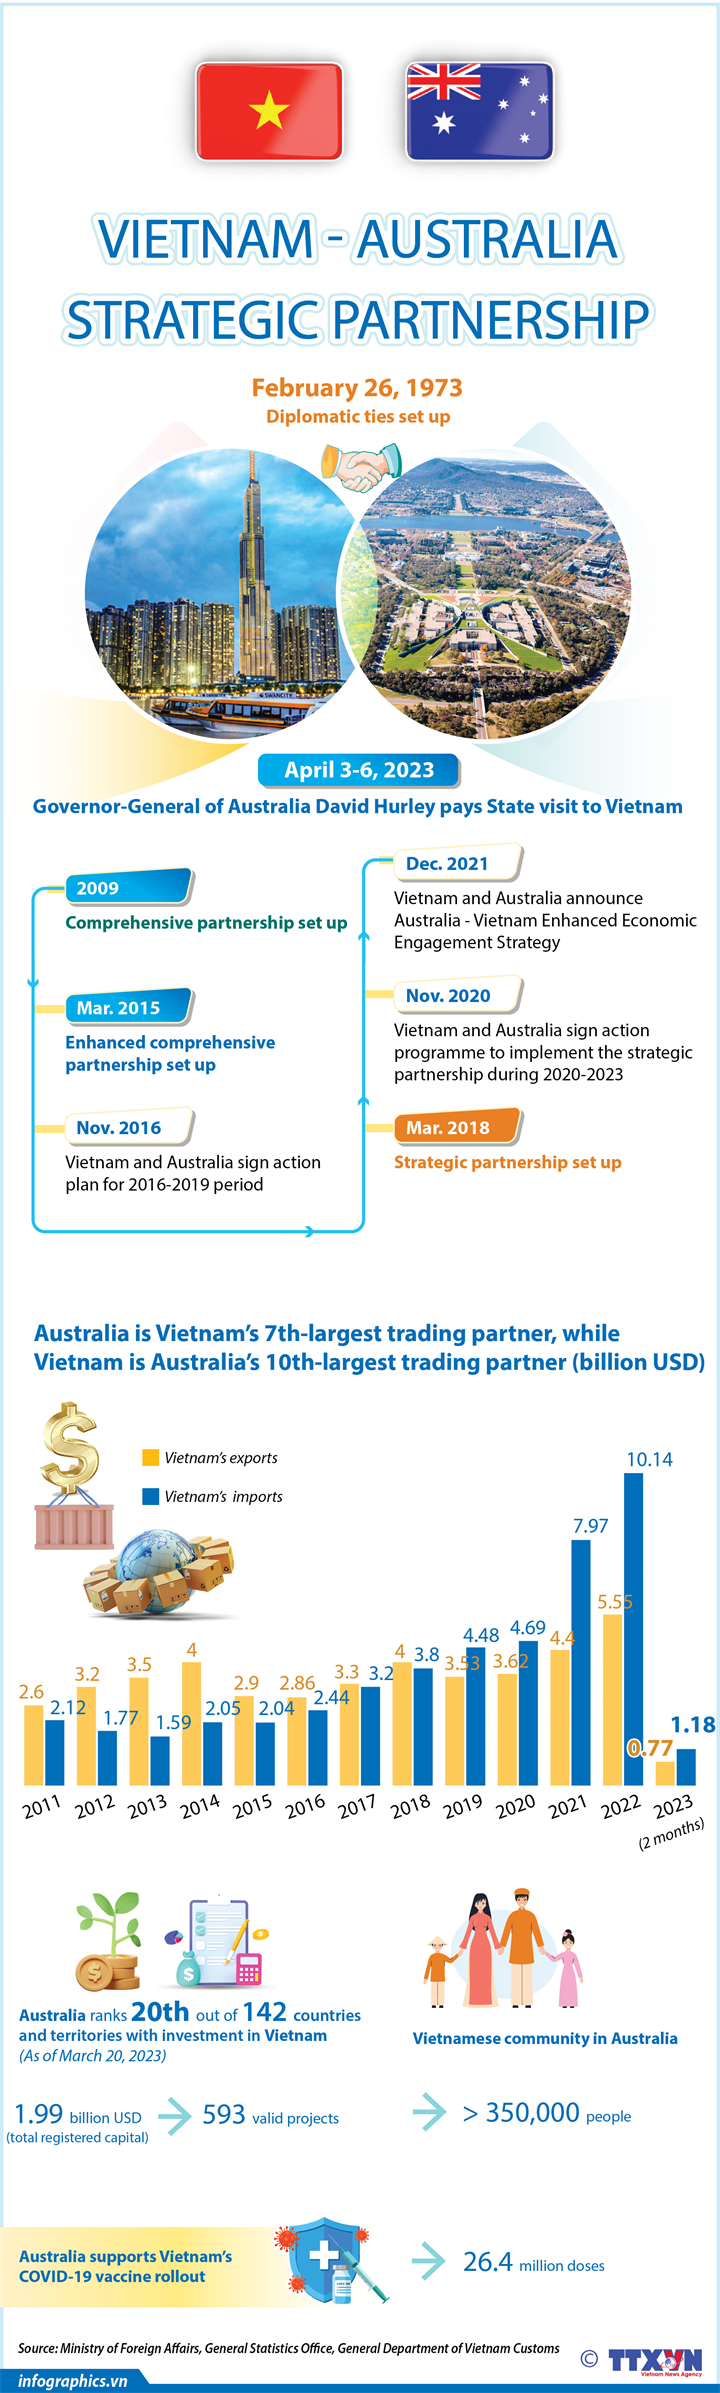 Vietnam - Australia Strategic Partnership